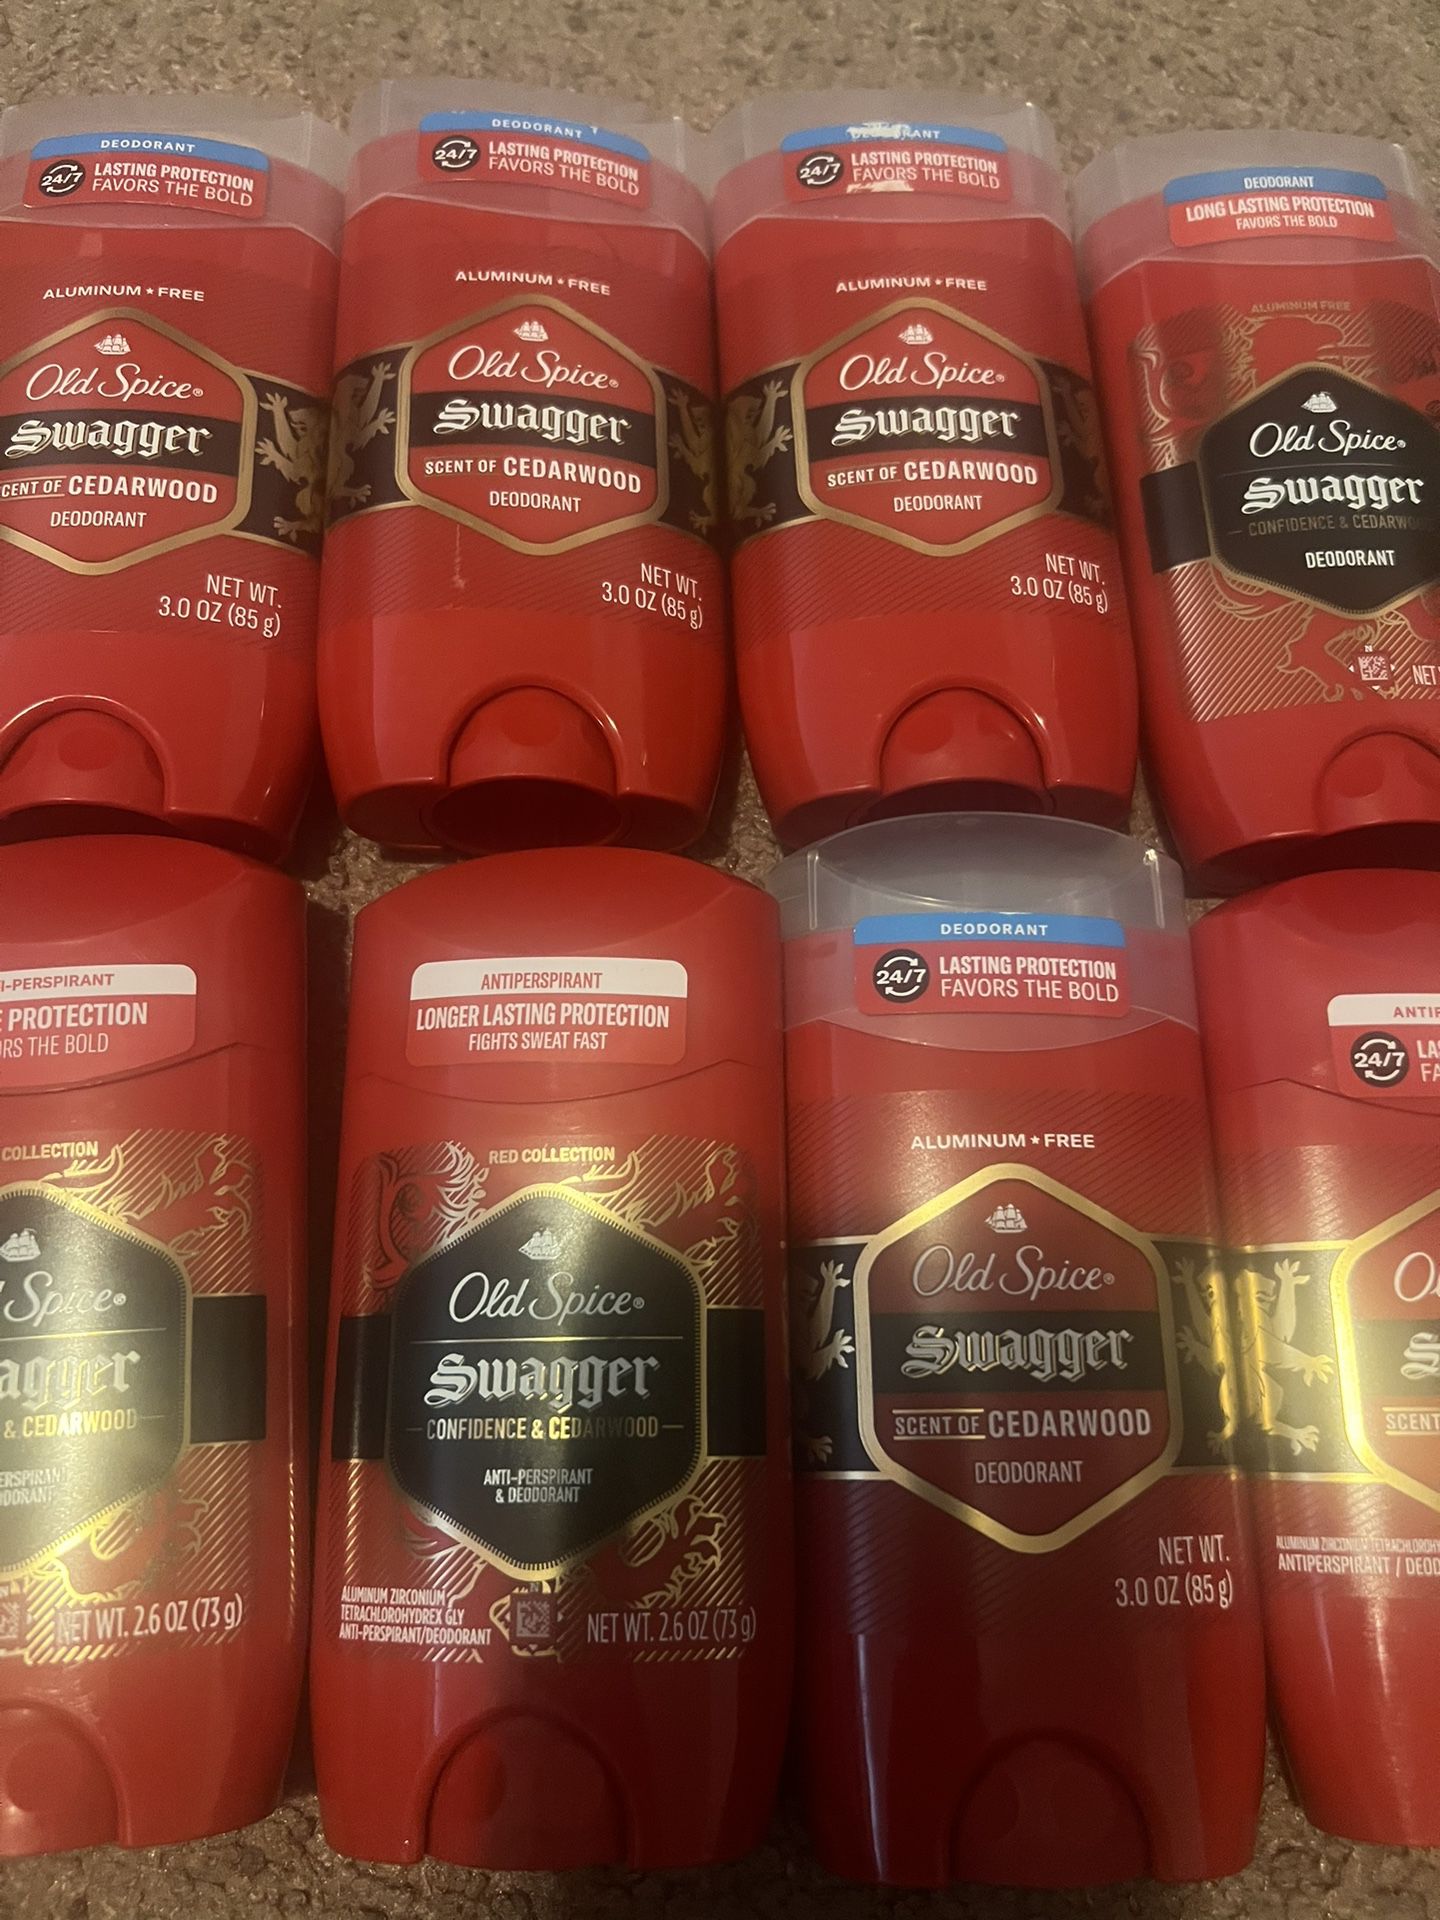 Old Spice Deodorant 2/$5